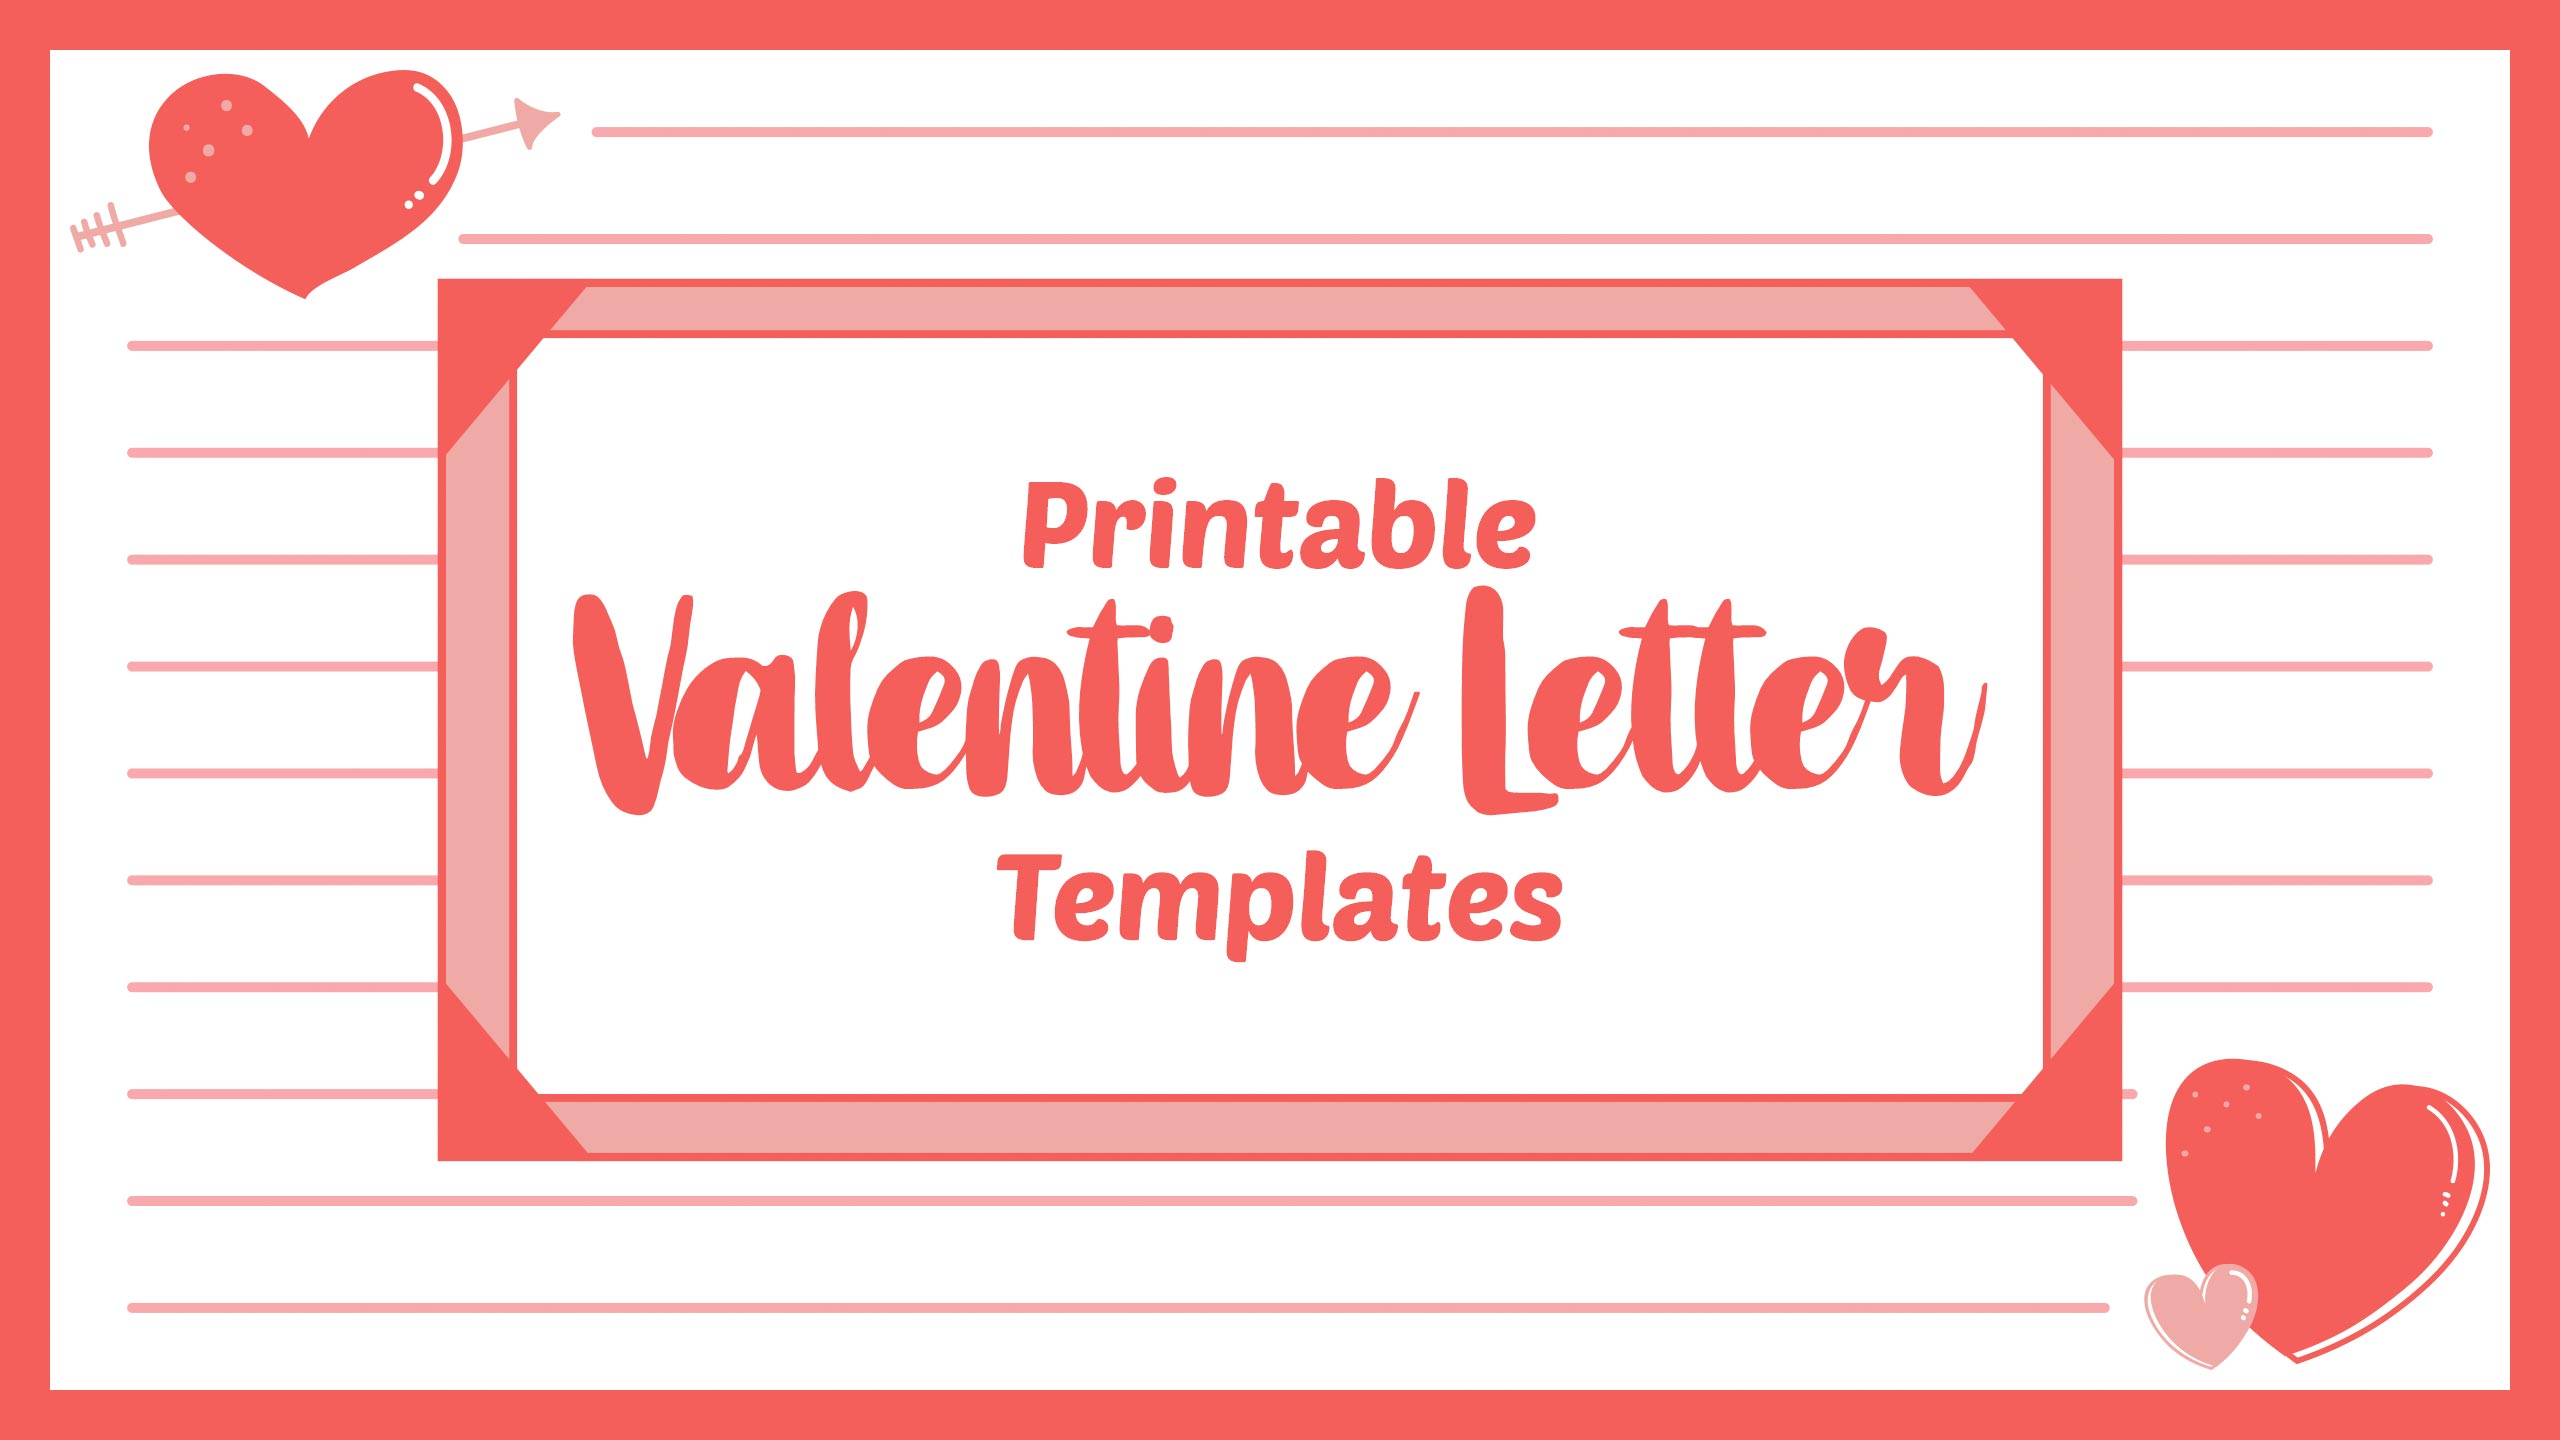 Printable Valentine Letter Templates